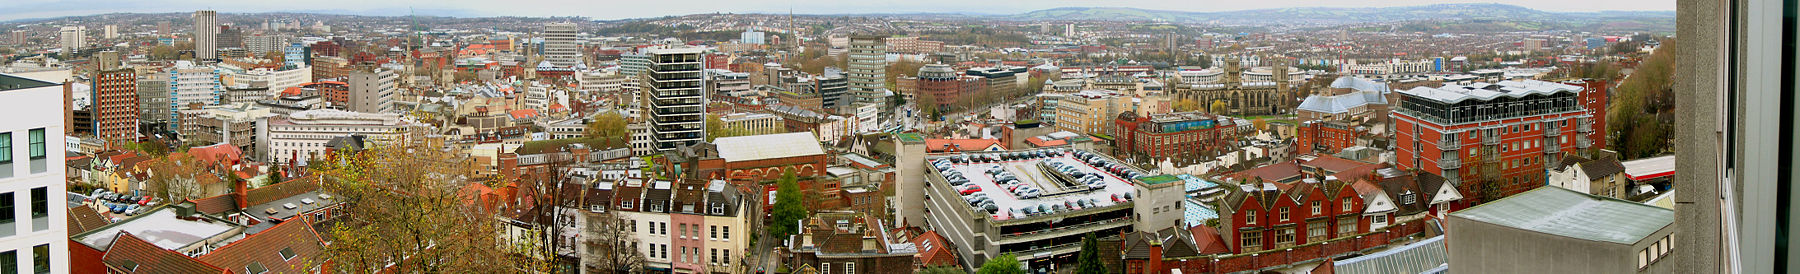 Panorama over Bristol